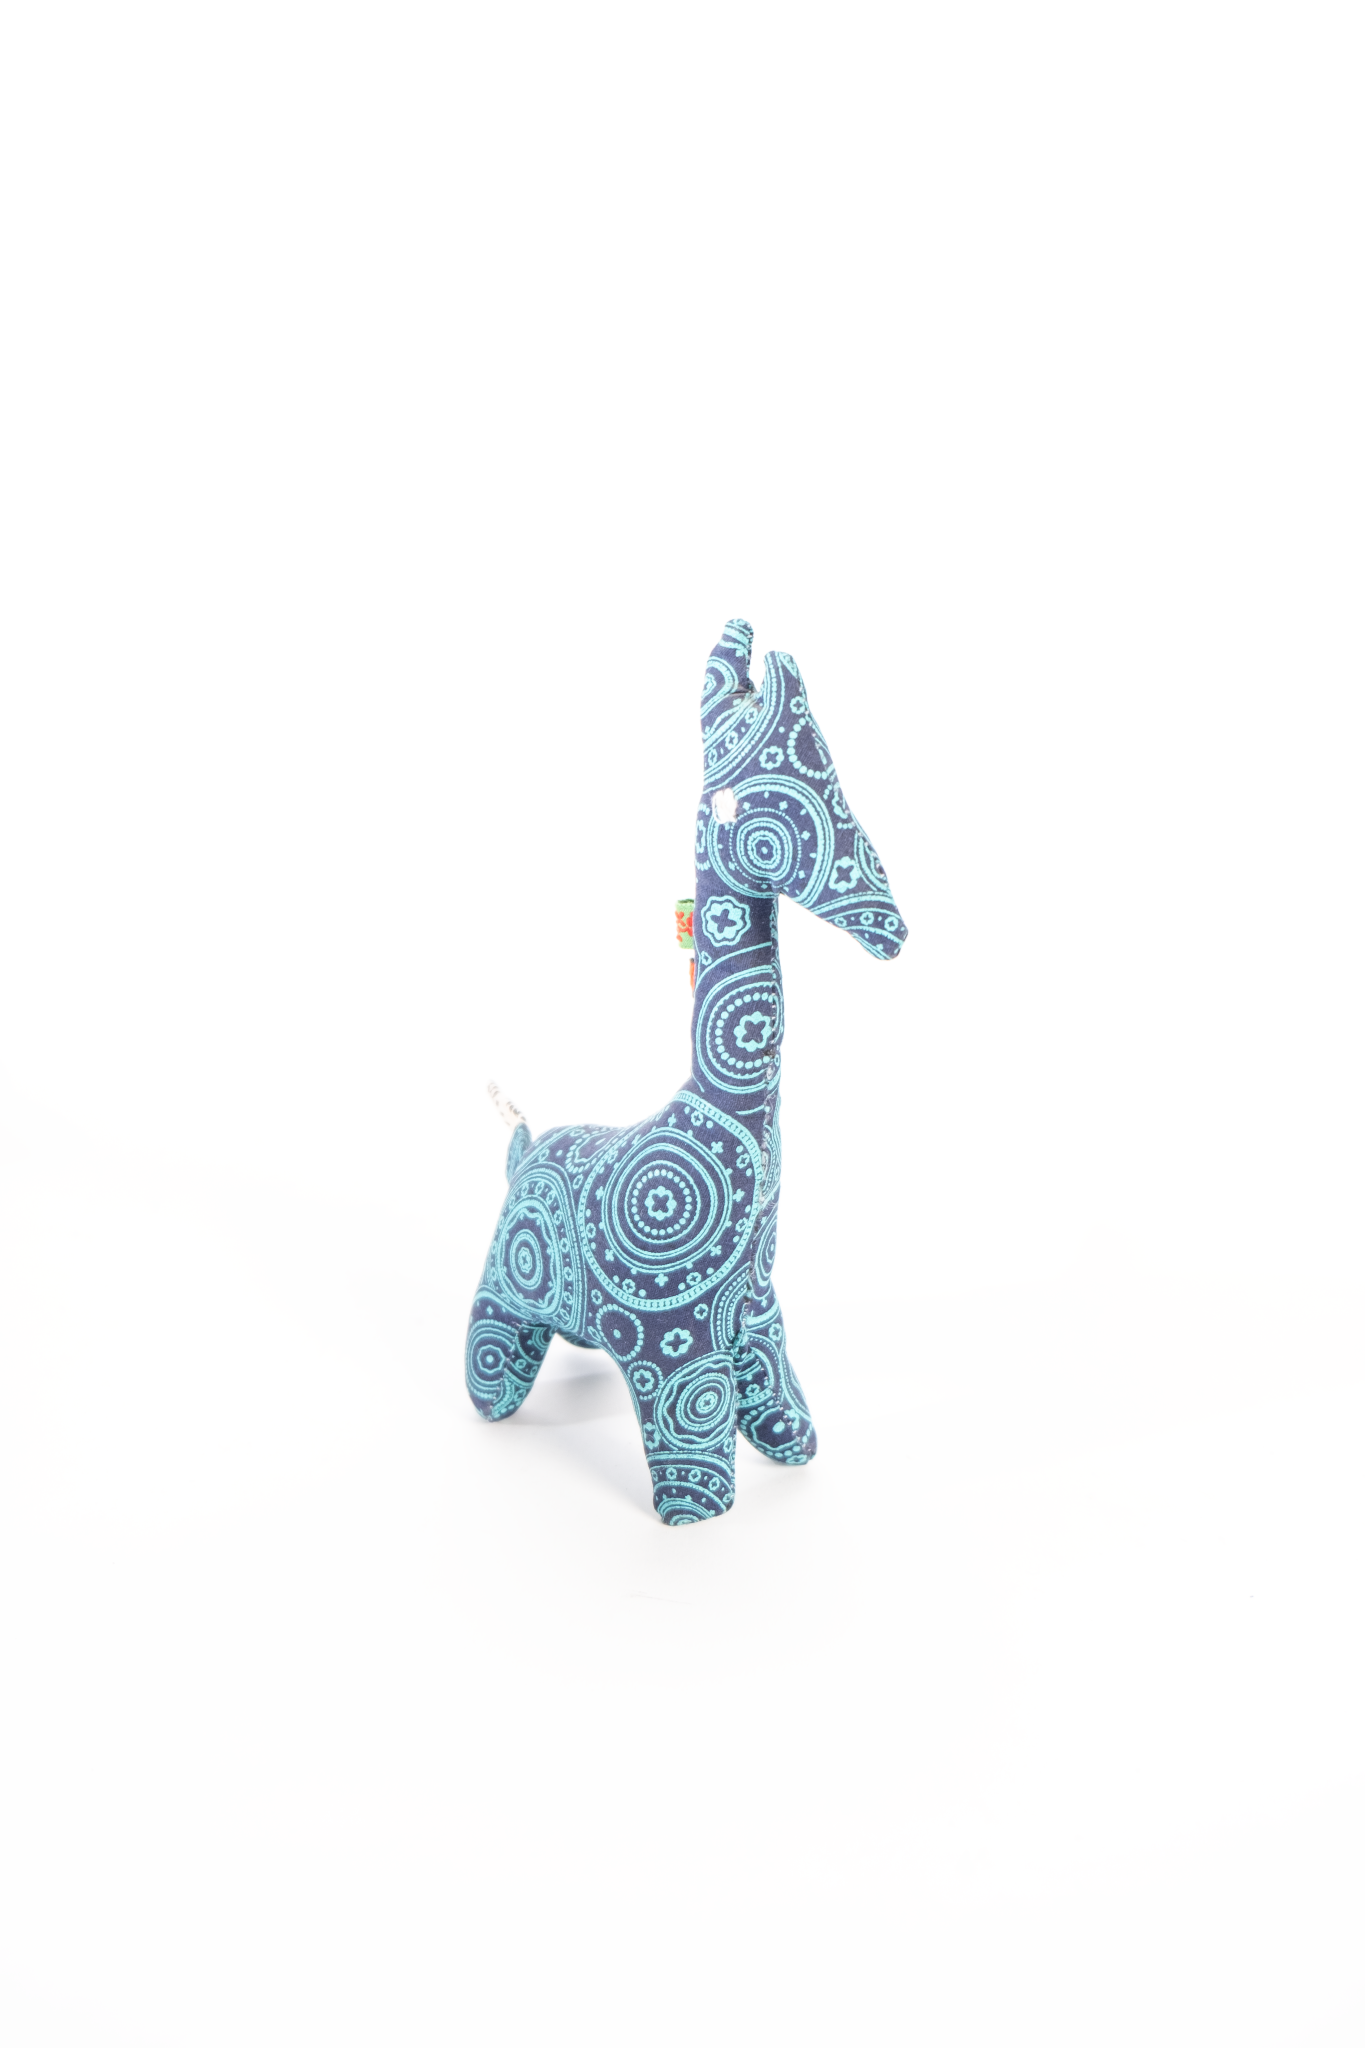 Handmade African Material Giraffe Soft Toy - Small